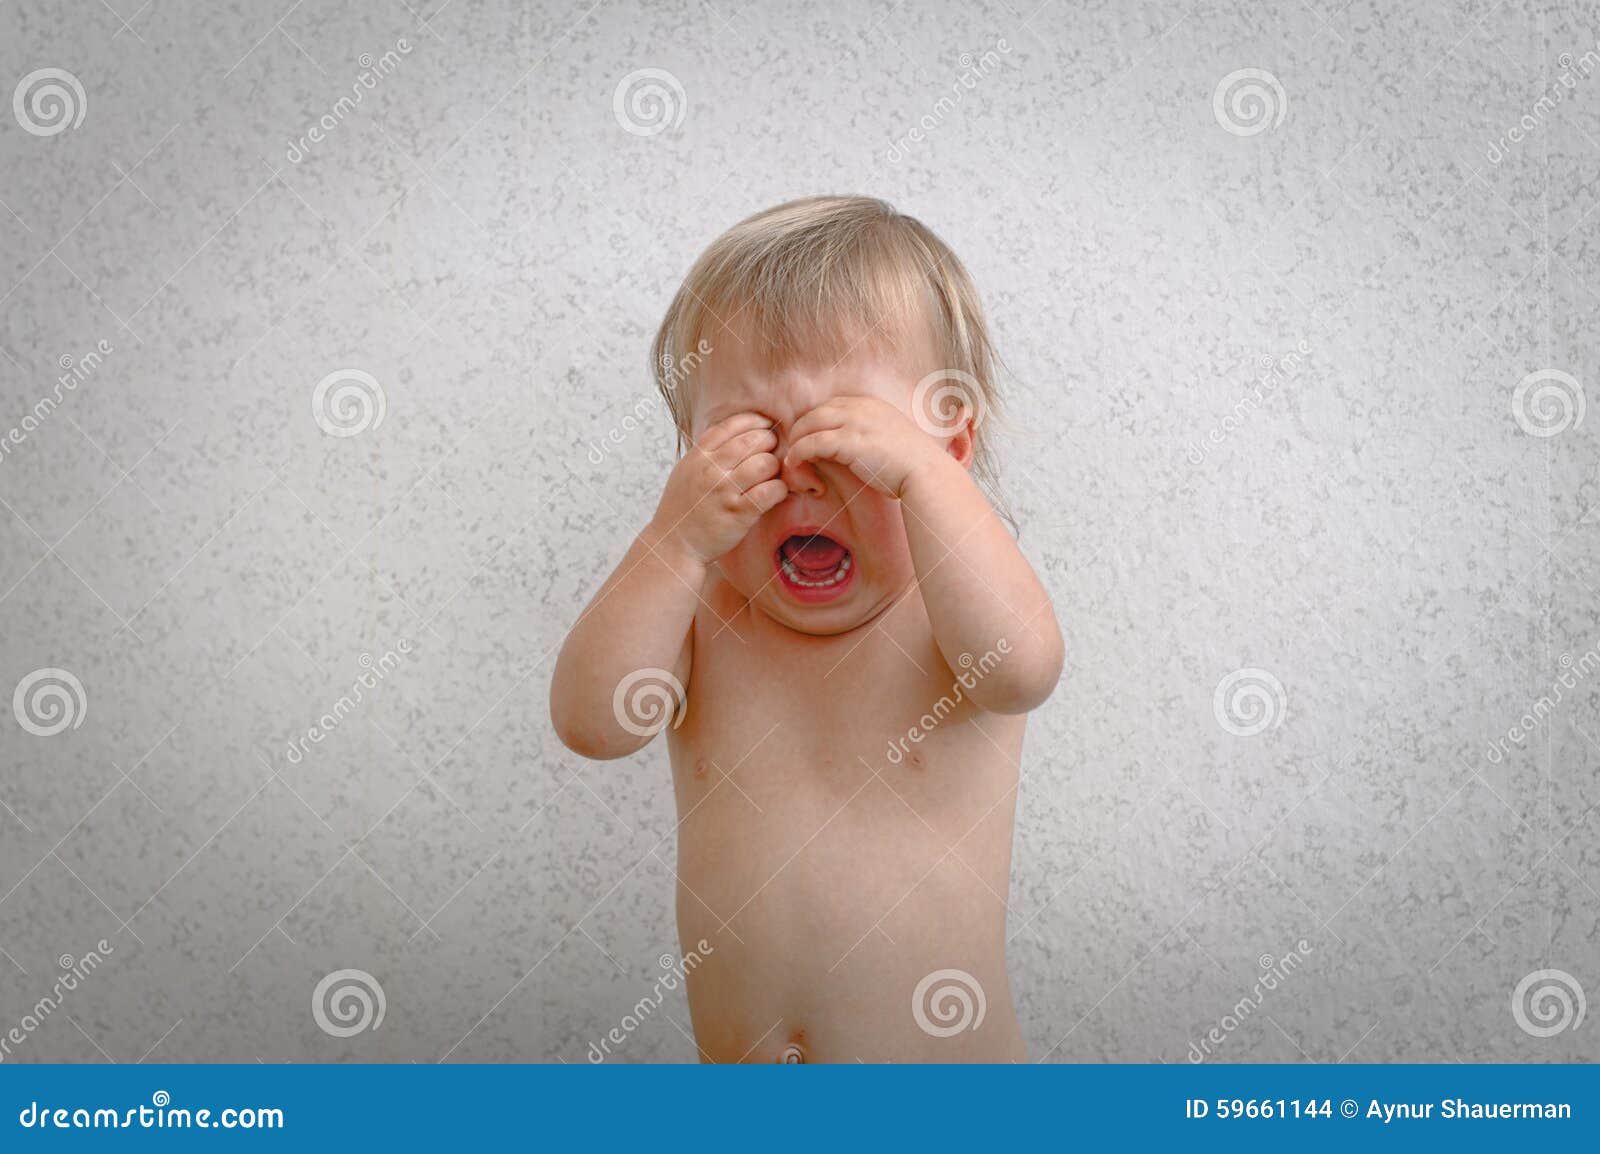 Screaming Crying Baby Rubbing Her Eyes Stock Photo - Image of eyes ...